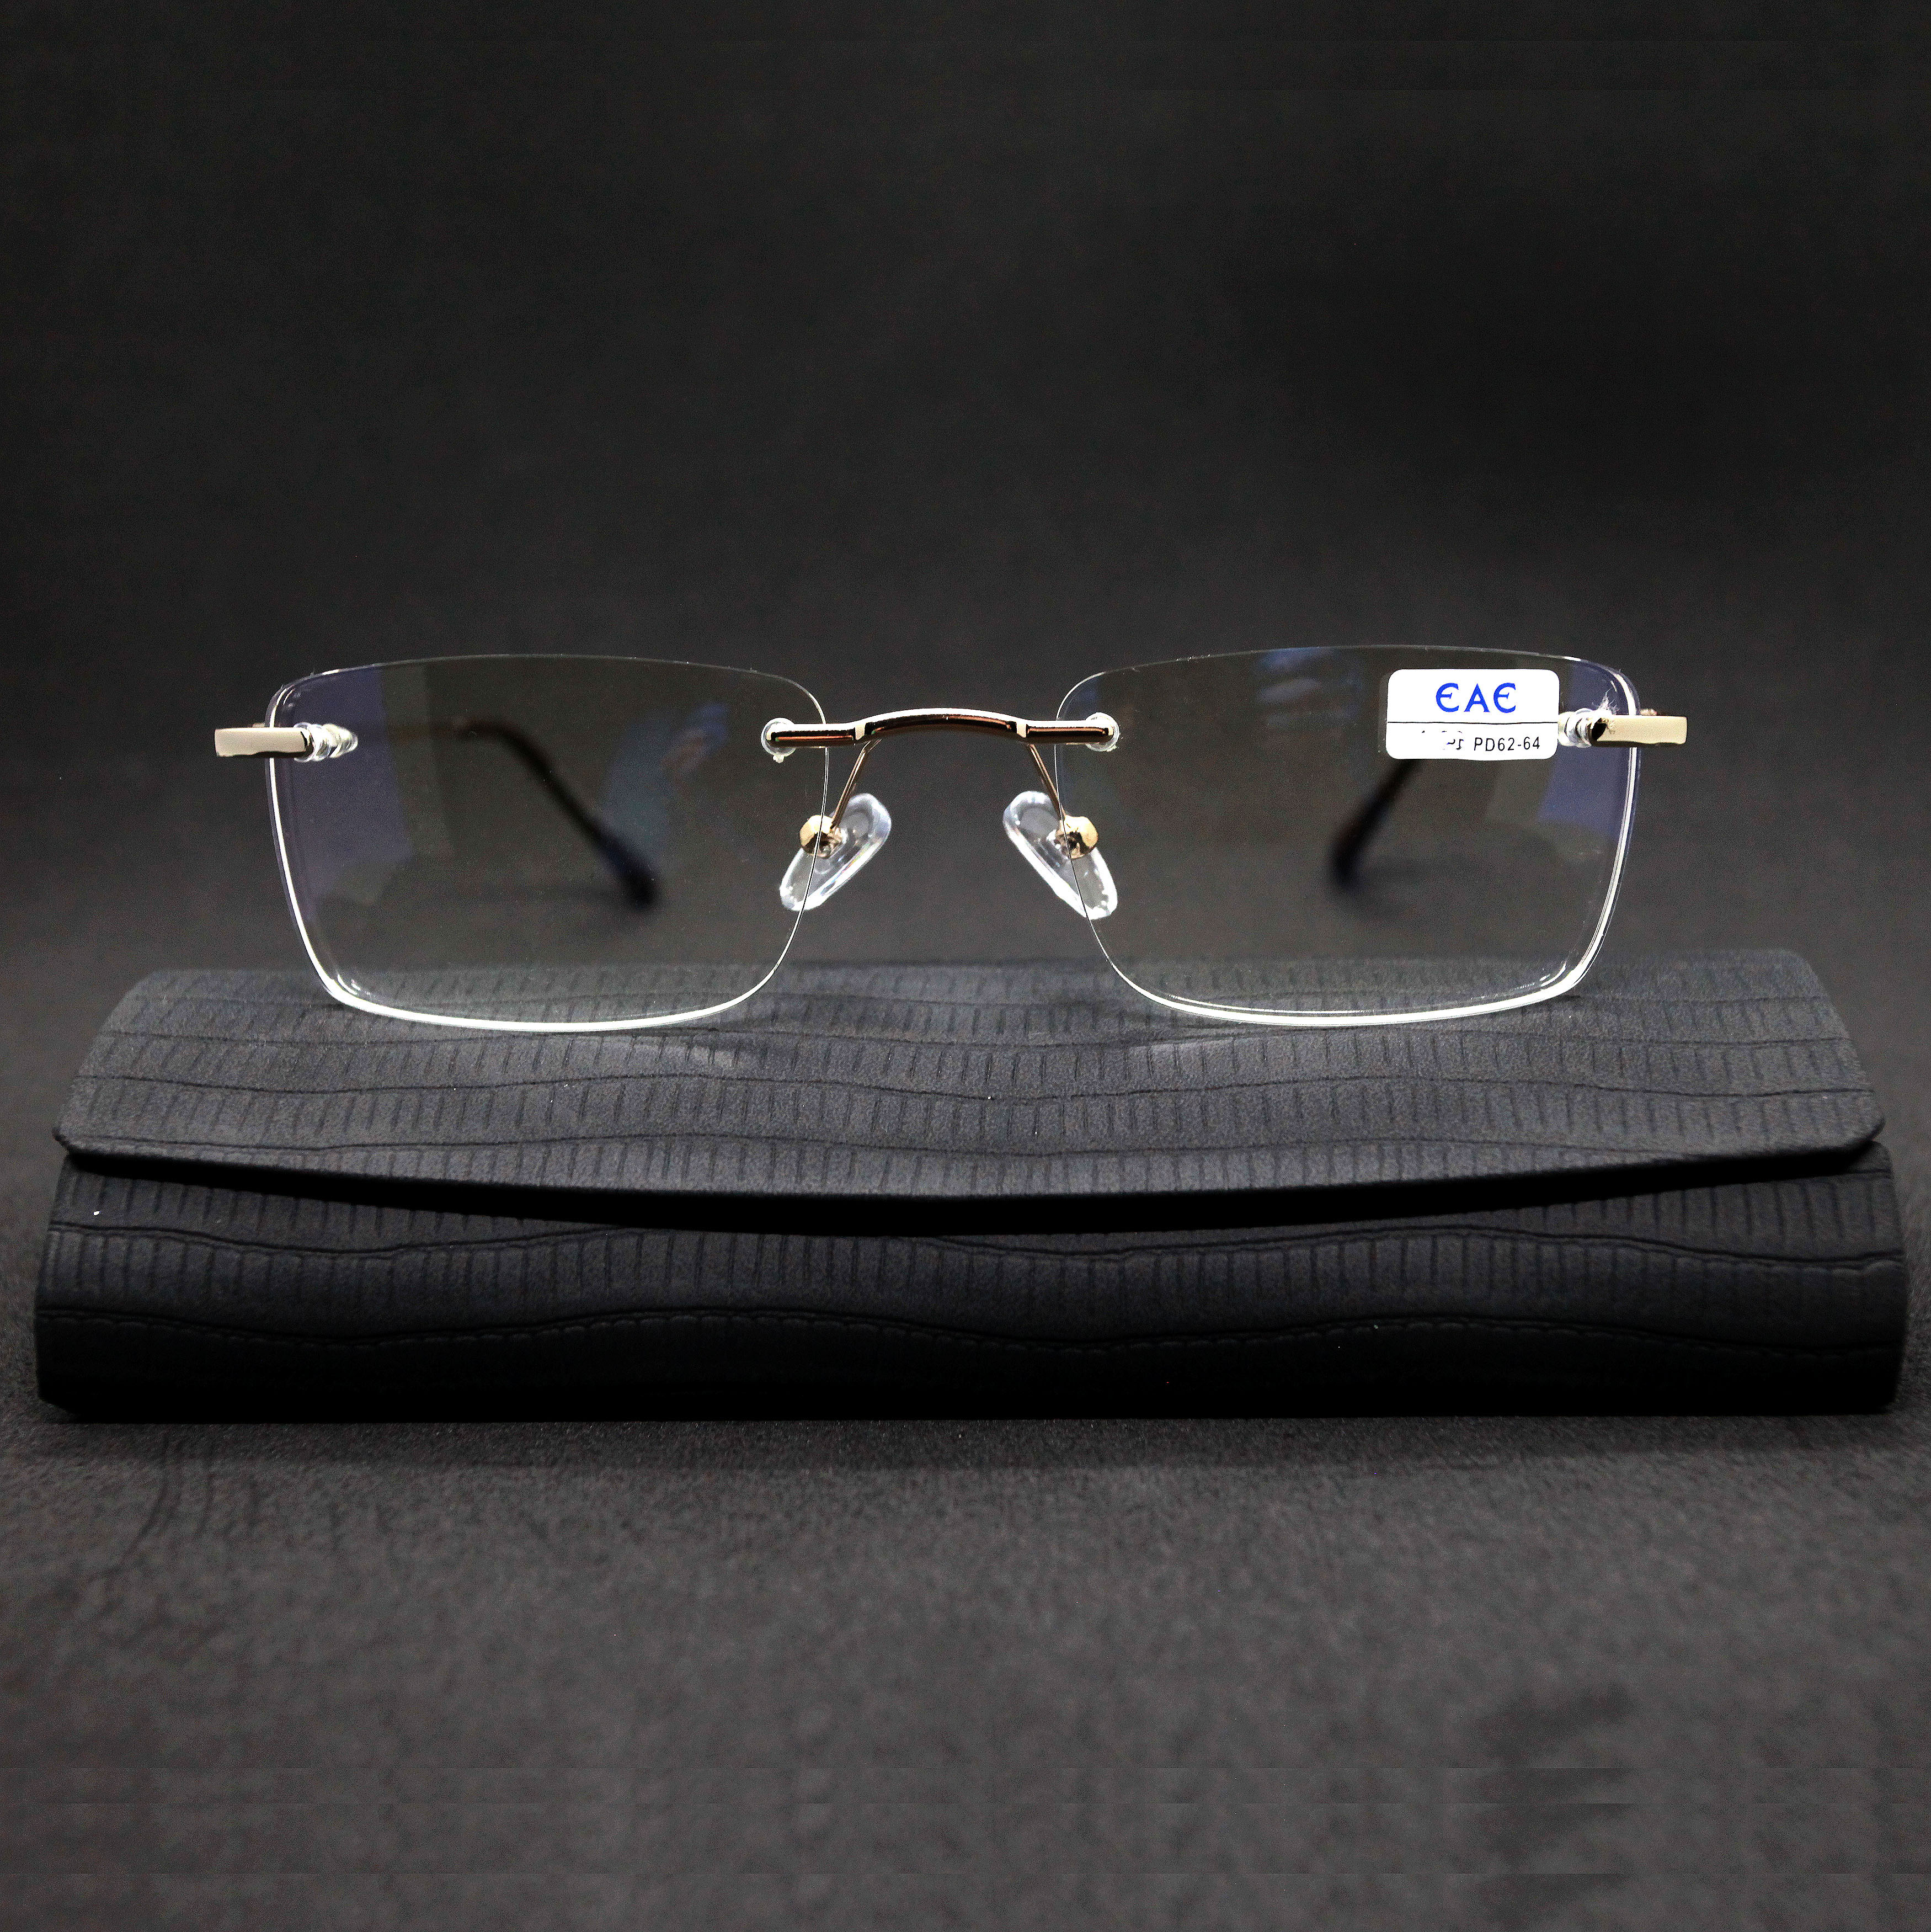 Безободковые очки EAE 1037 -3.00, c футляром, антиблик, цвет серый, РЦ 62-64